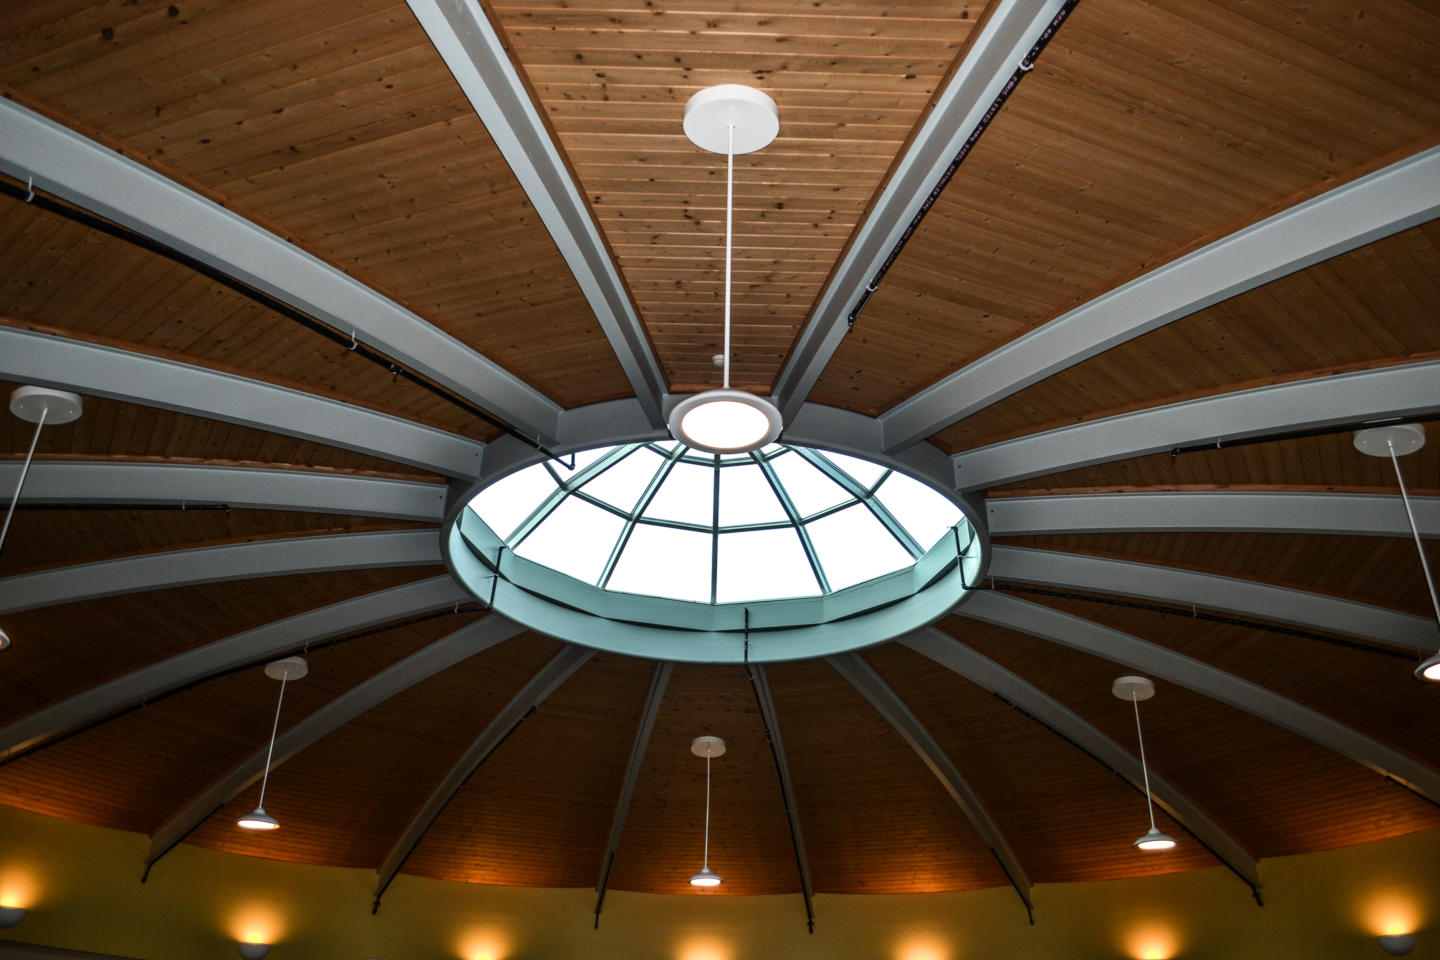 Oak Brook Public Library dome ceiling by Harbour Contractors